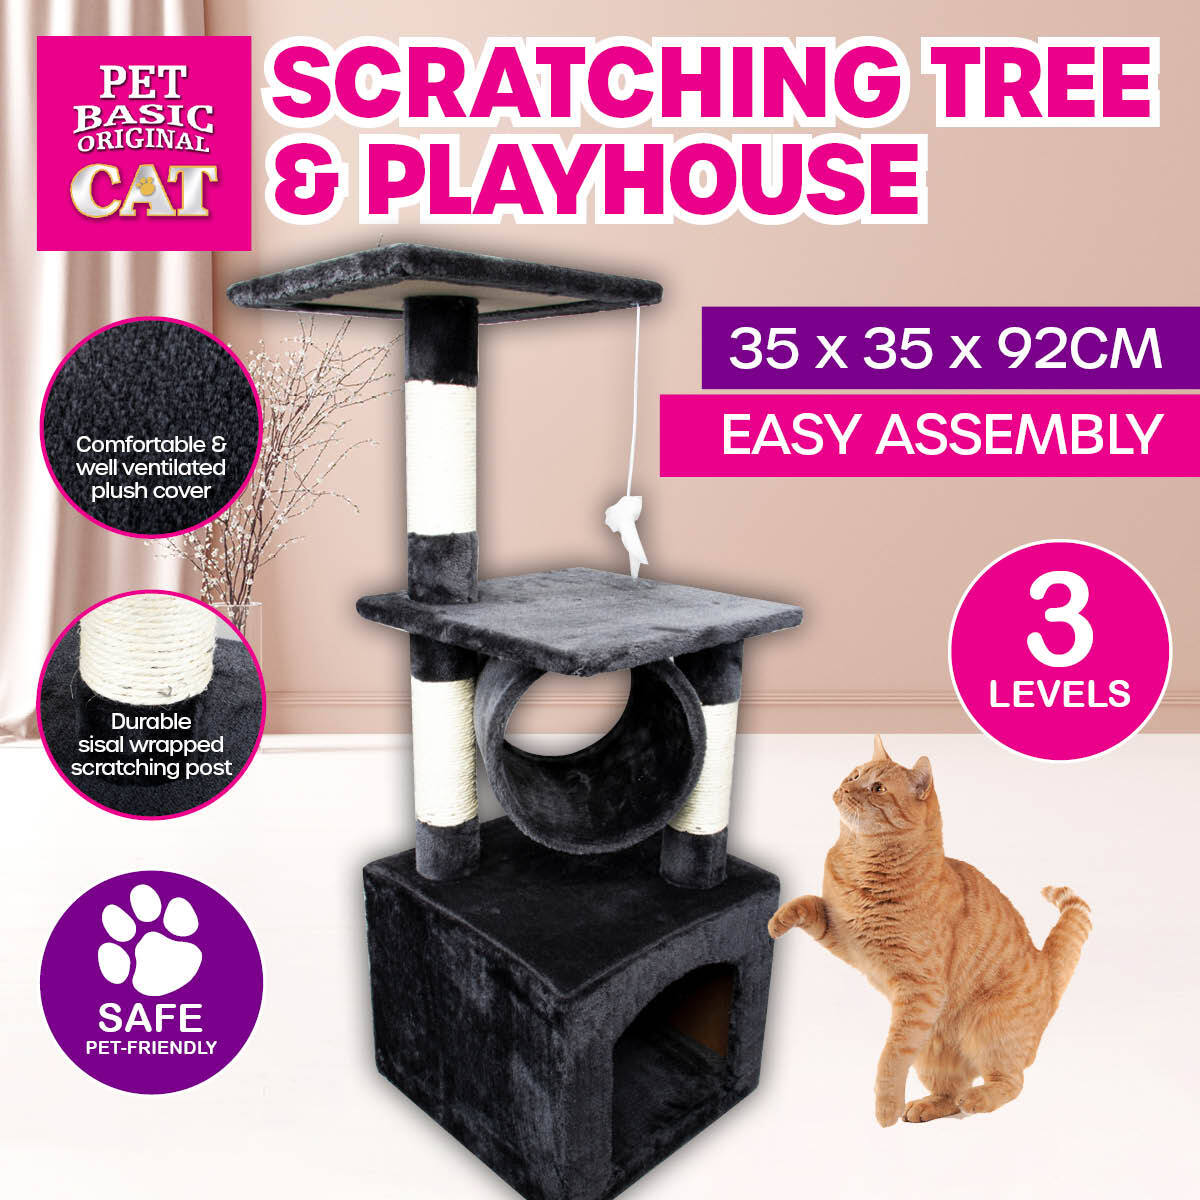 Pet Basic 3 Level Cat Scratch Tree & Playhouse Fun Climb Rest 92 x 35cm Deals499